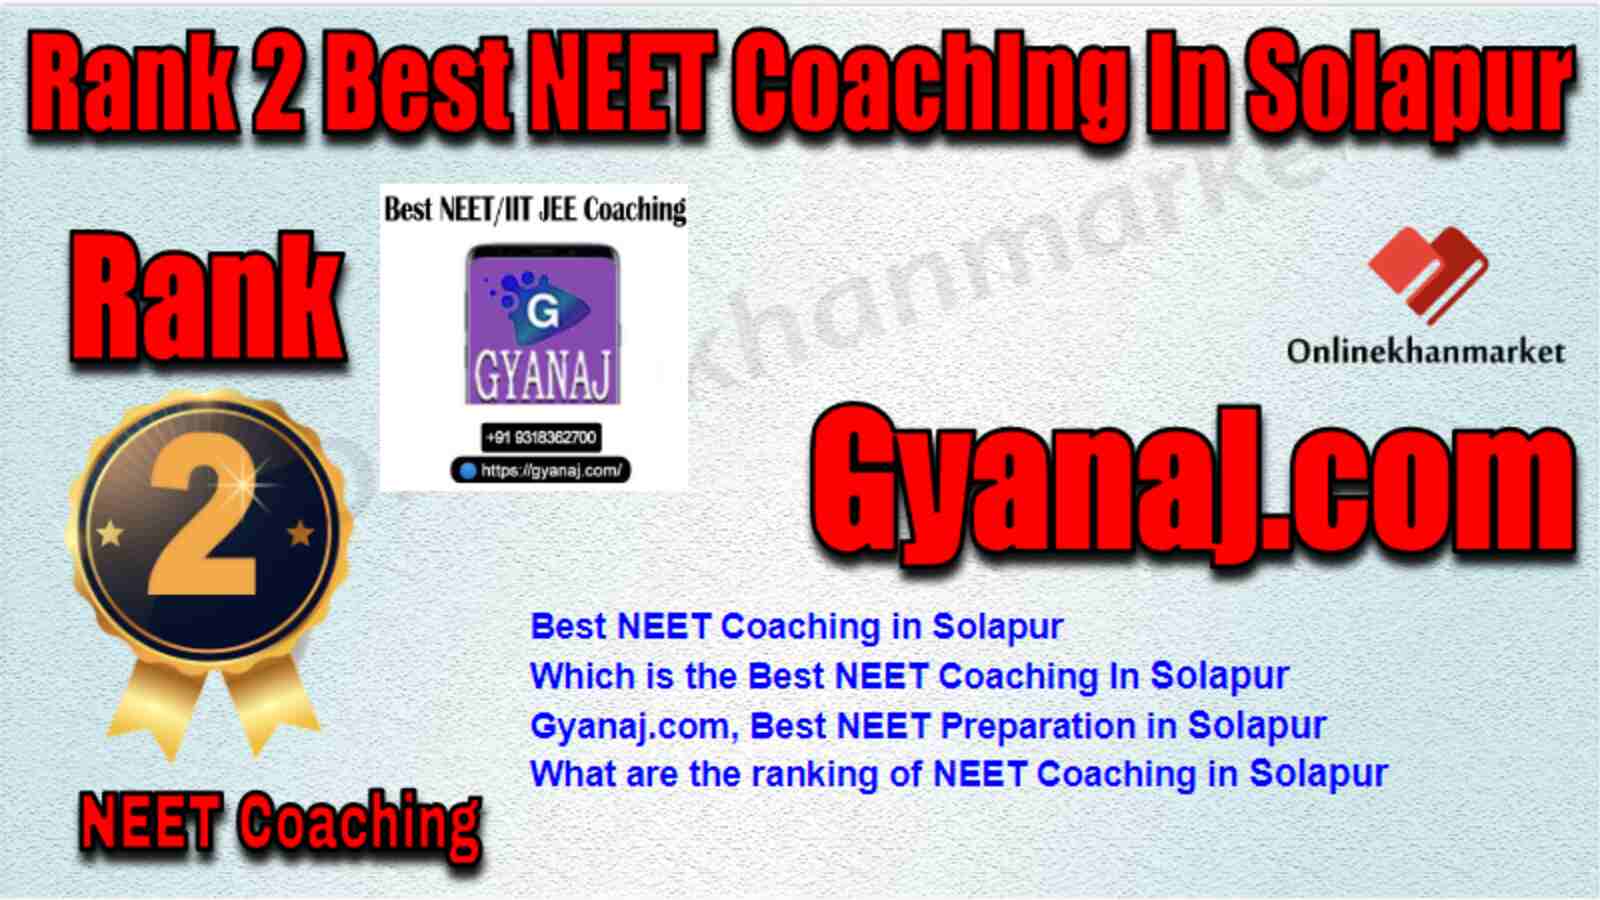 Rank 2 Best NEET Coaching in Solapur